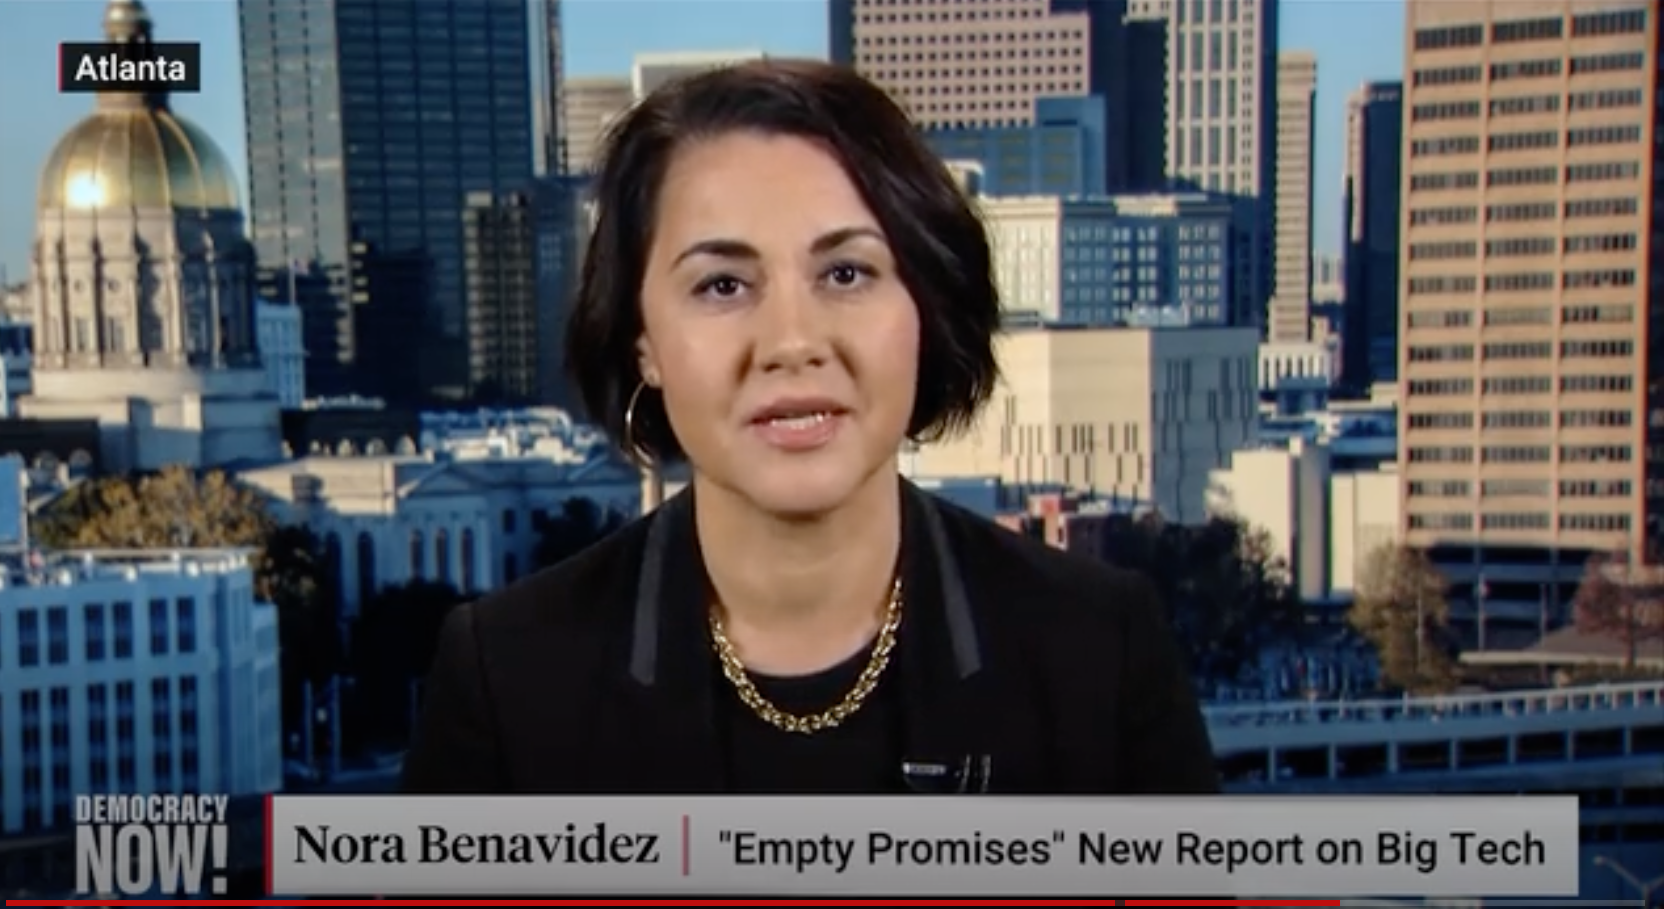 Free Press' Nora Benavidez speaking on Democracy Now